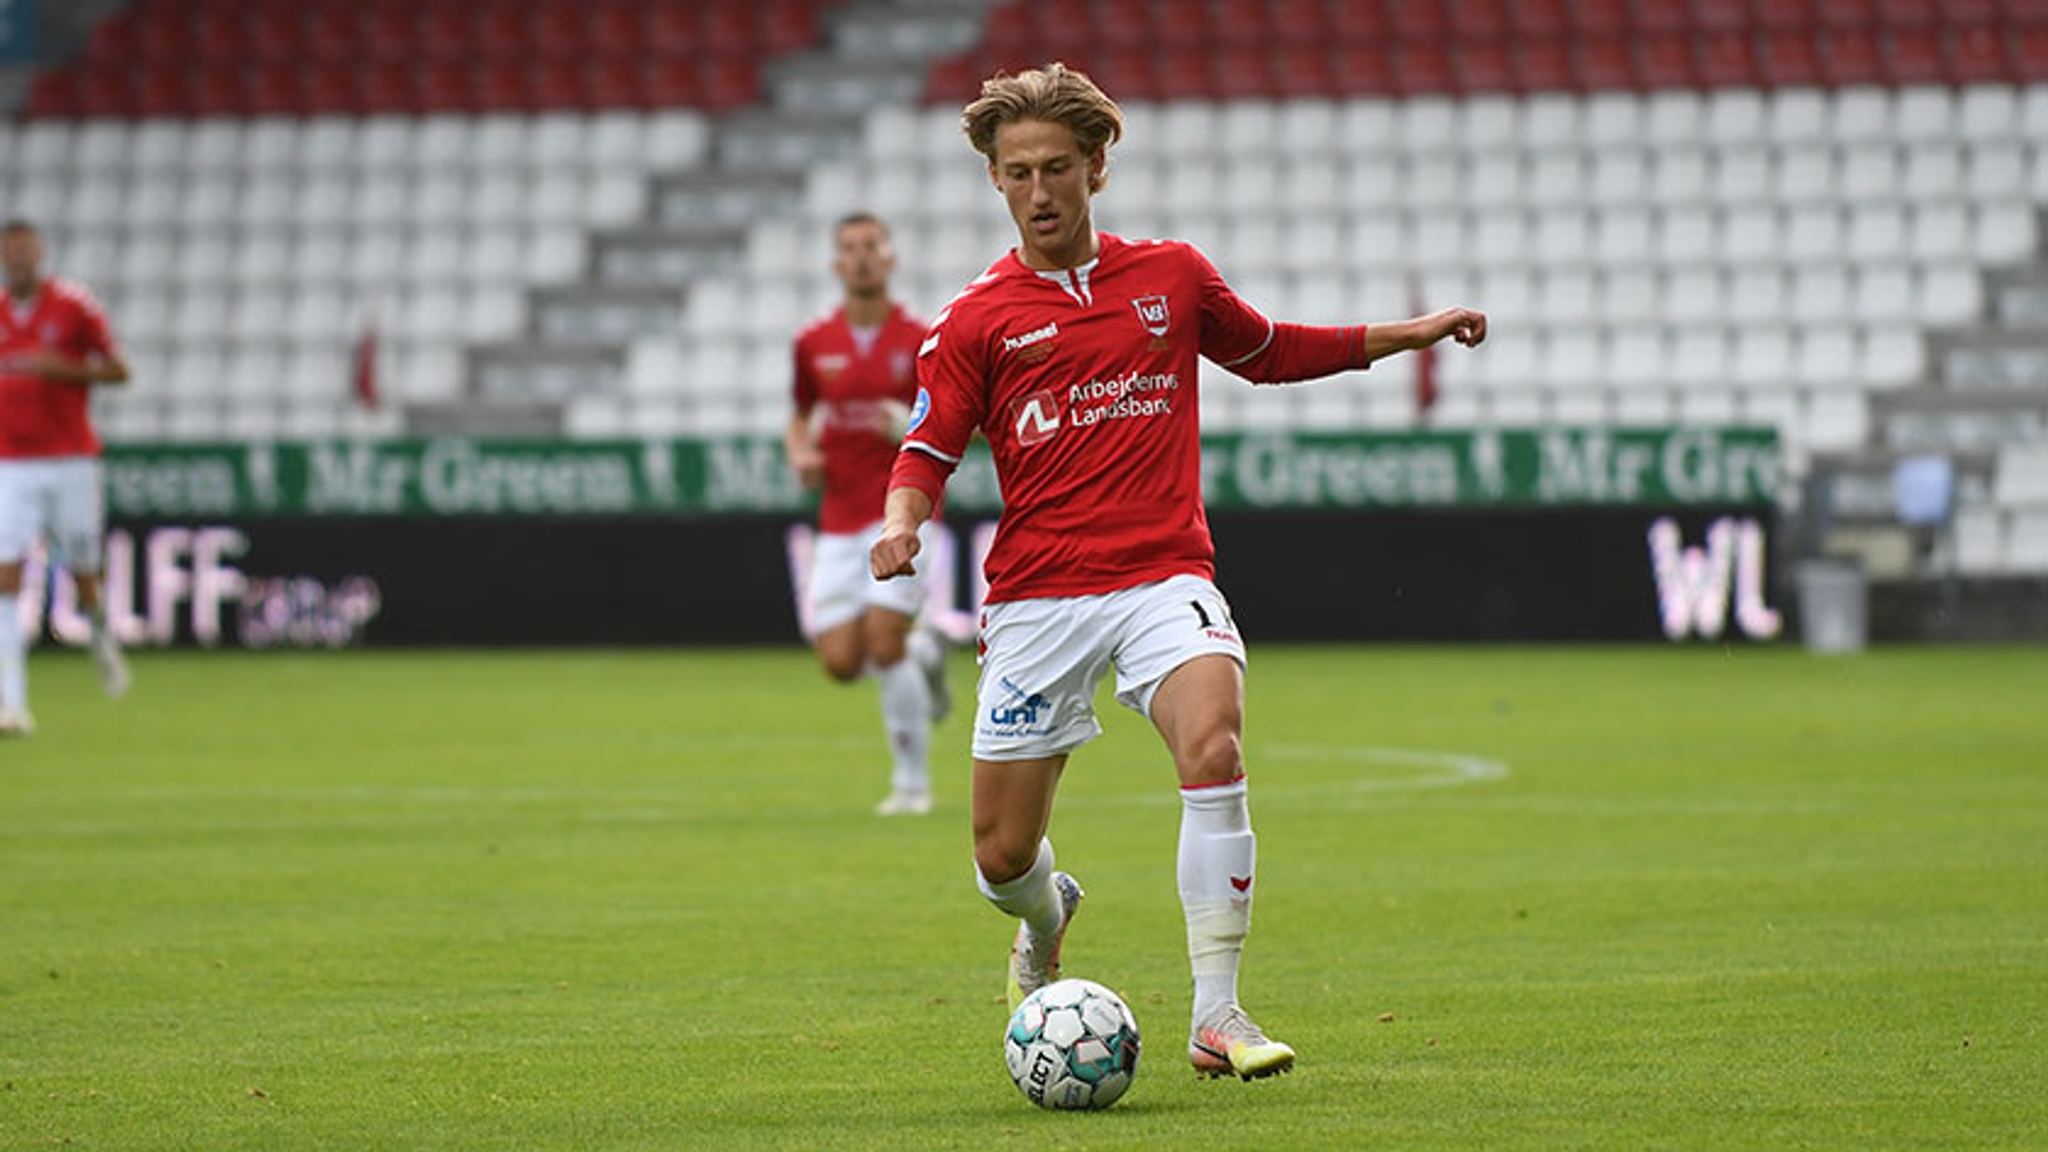 Arbnor Mucolli er Årets Profil i 1. division 2019/20